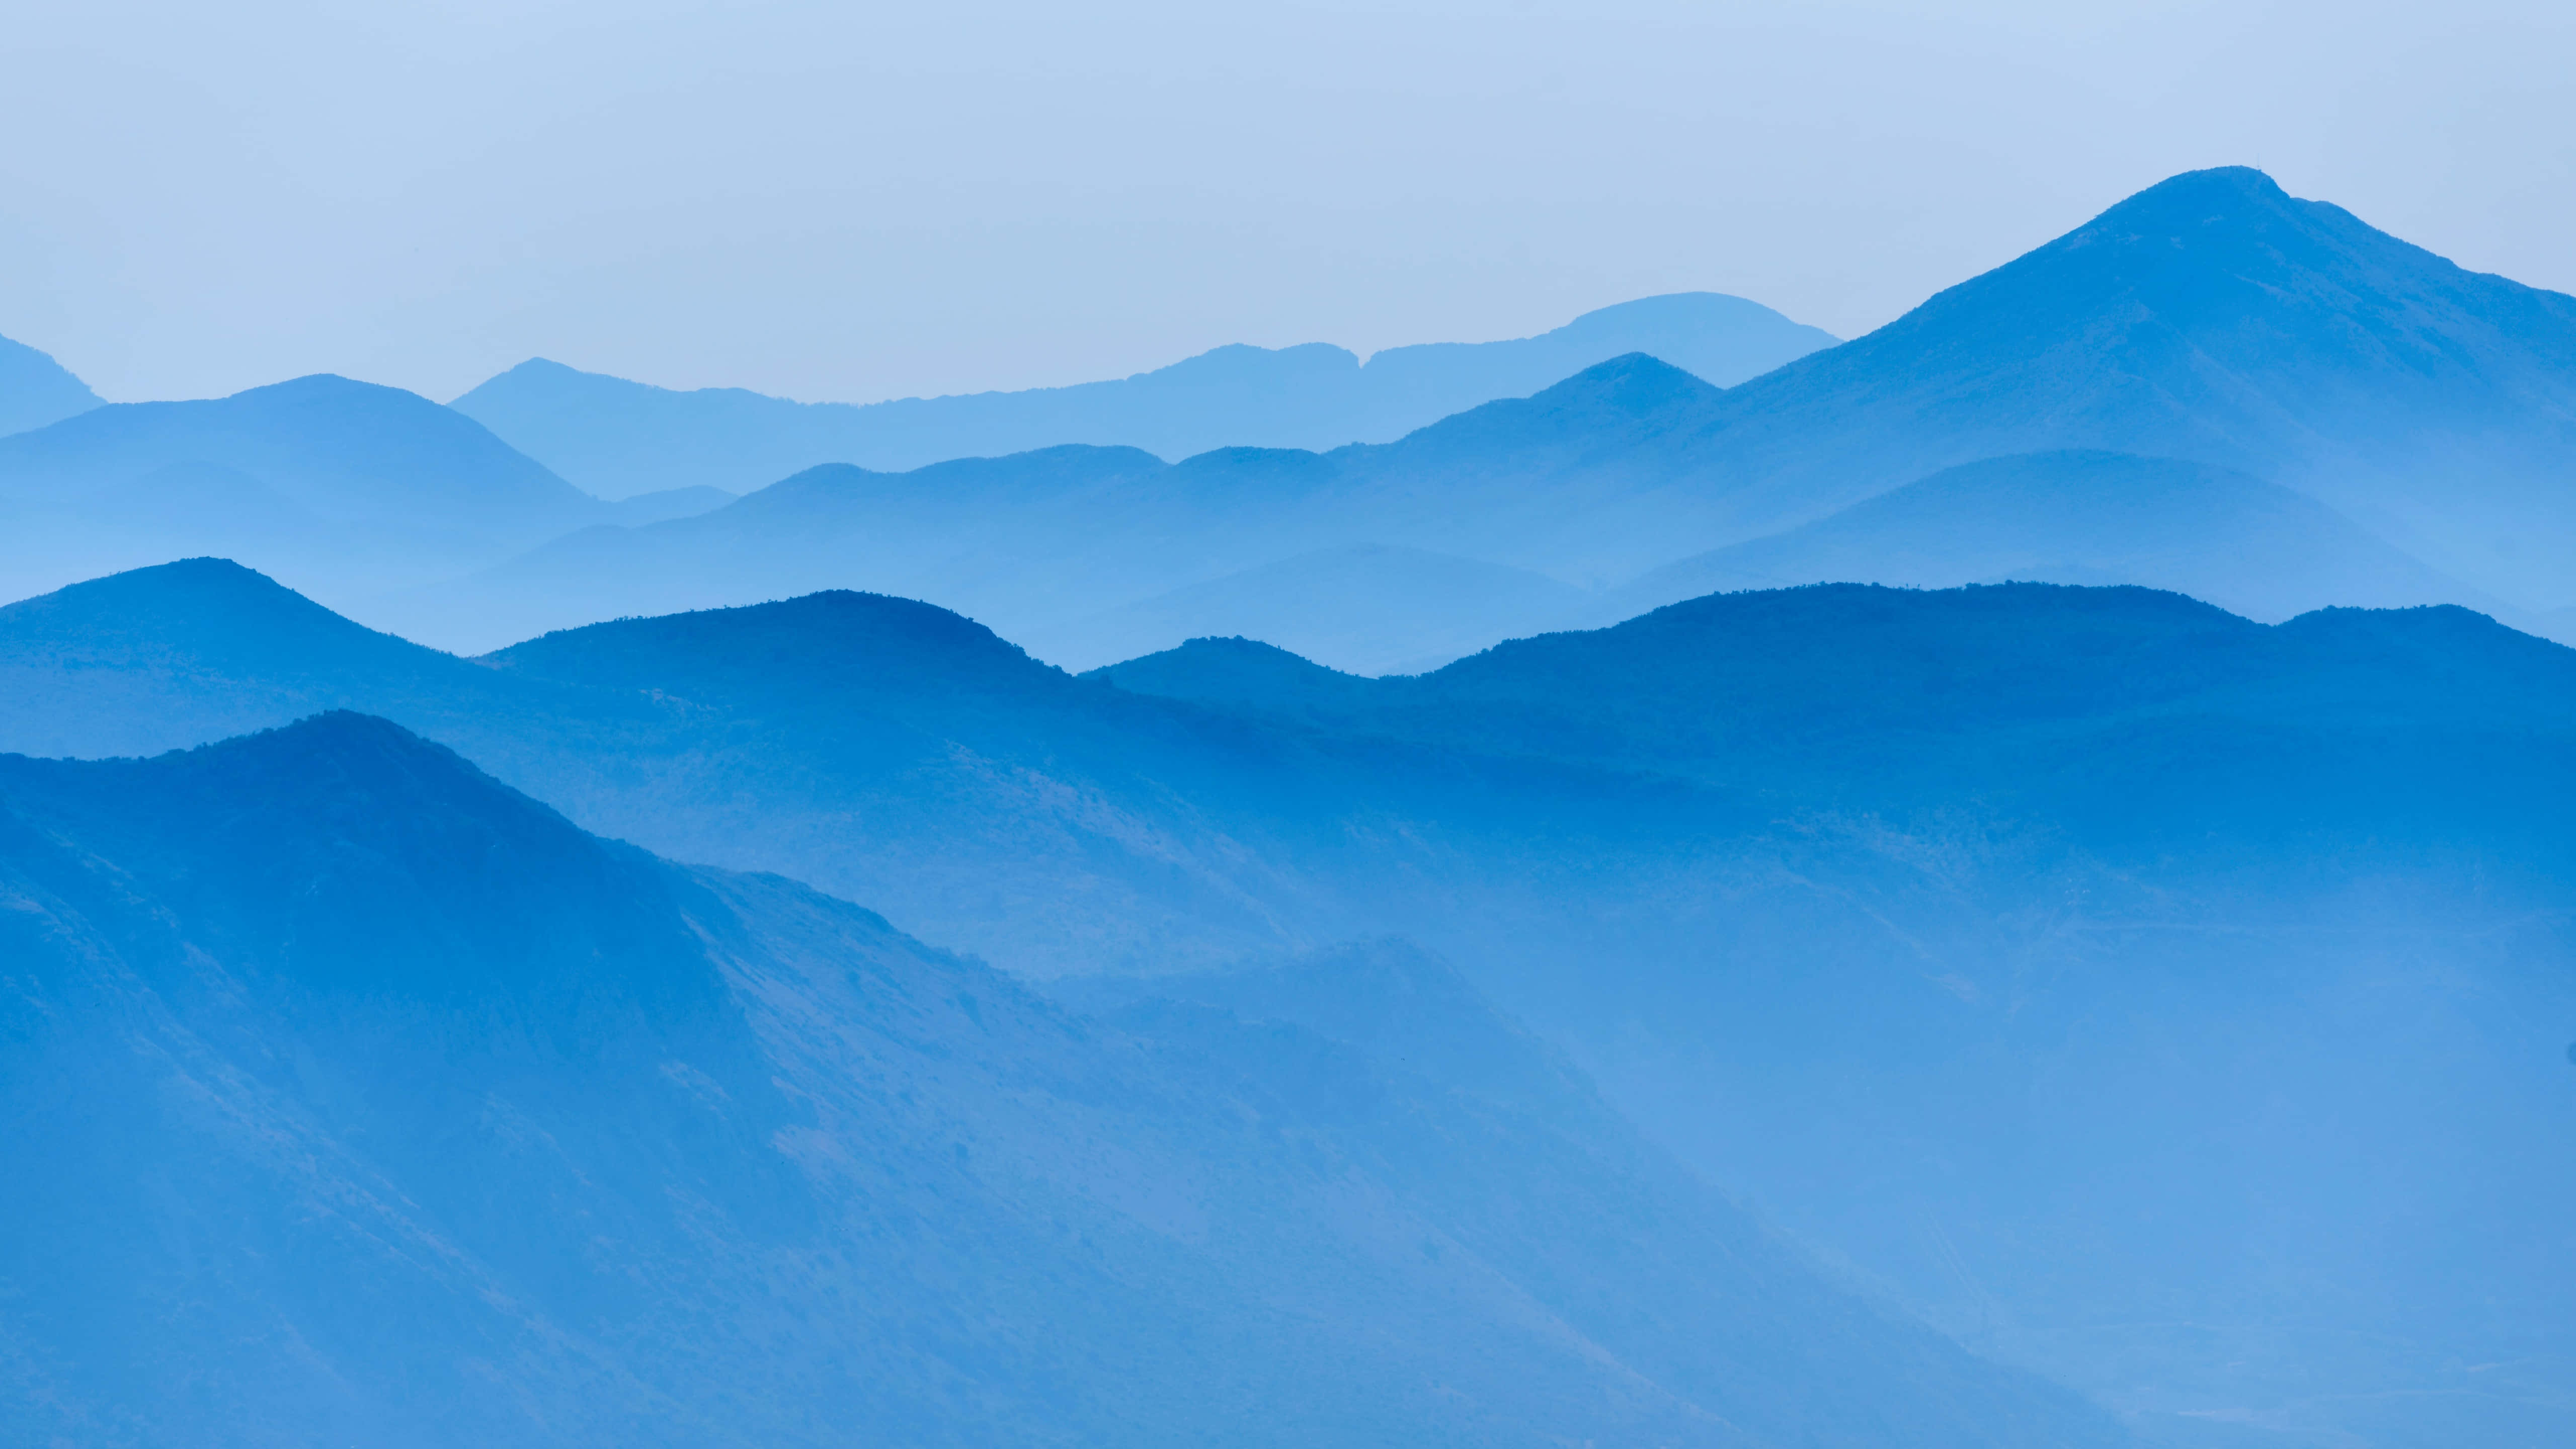 "explore The Beautiful Landscape Of Blue Mountain" Wallpaper